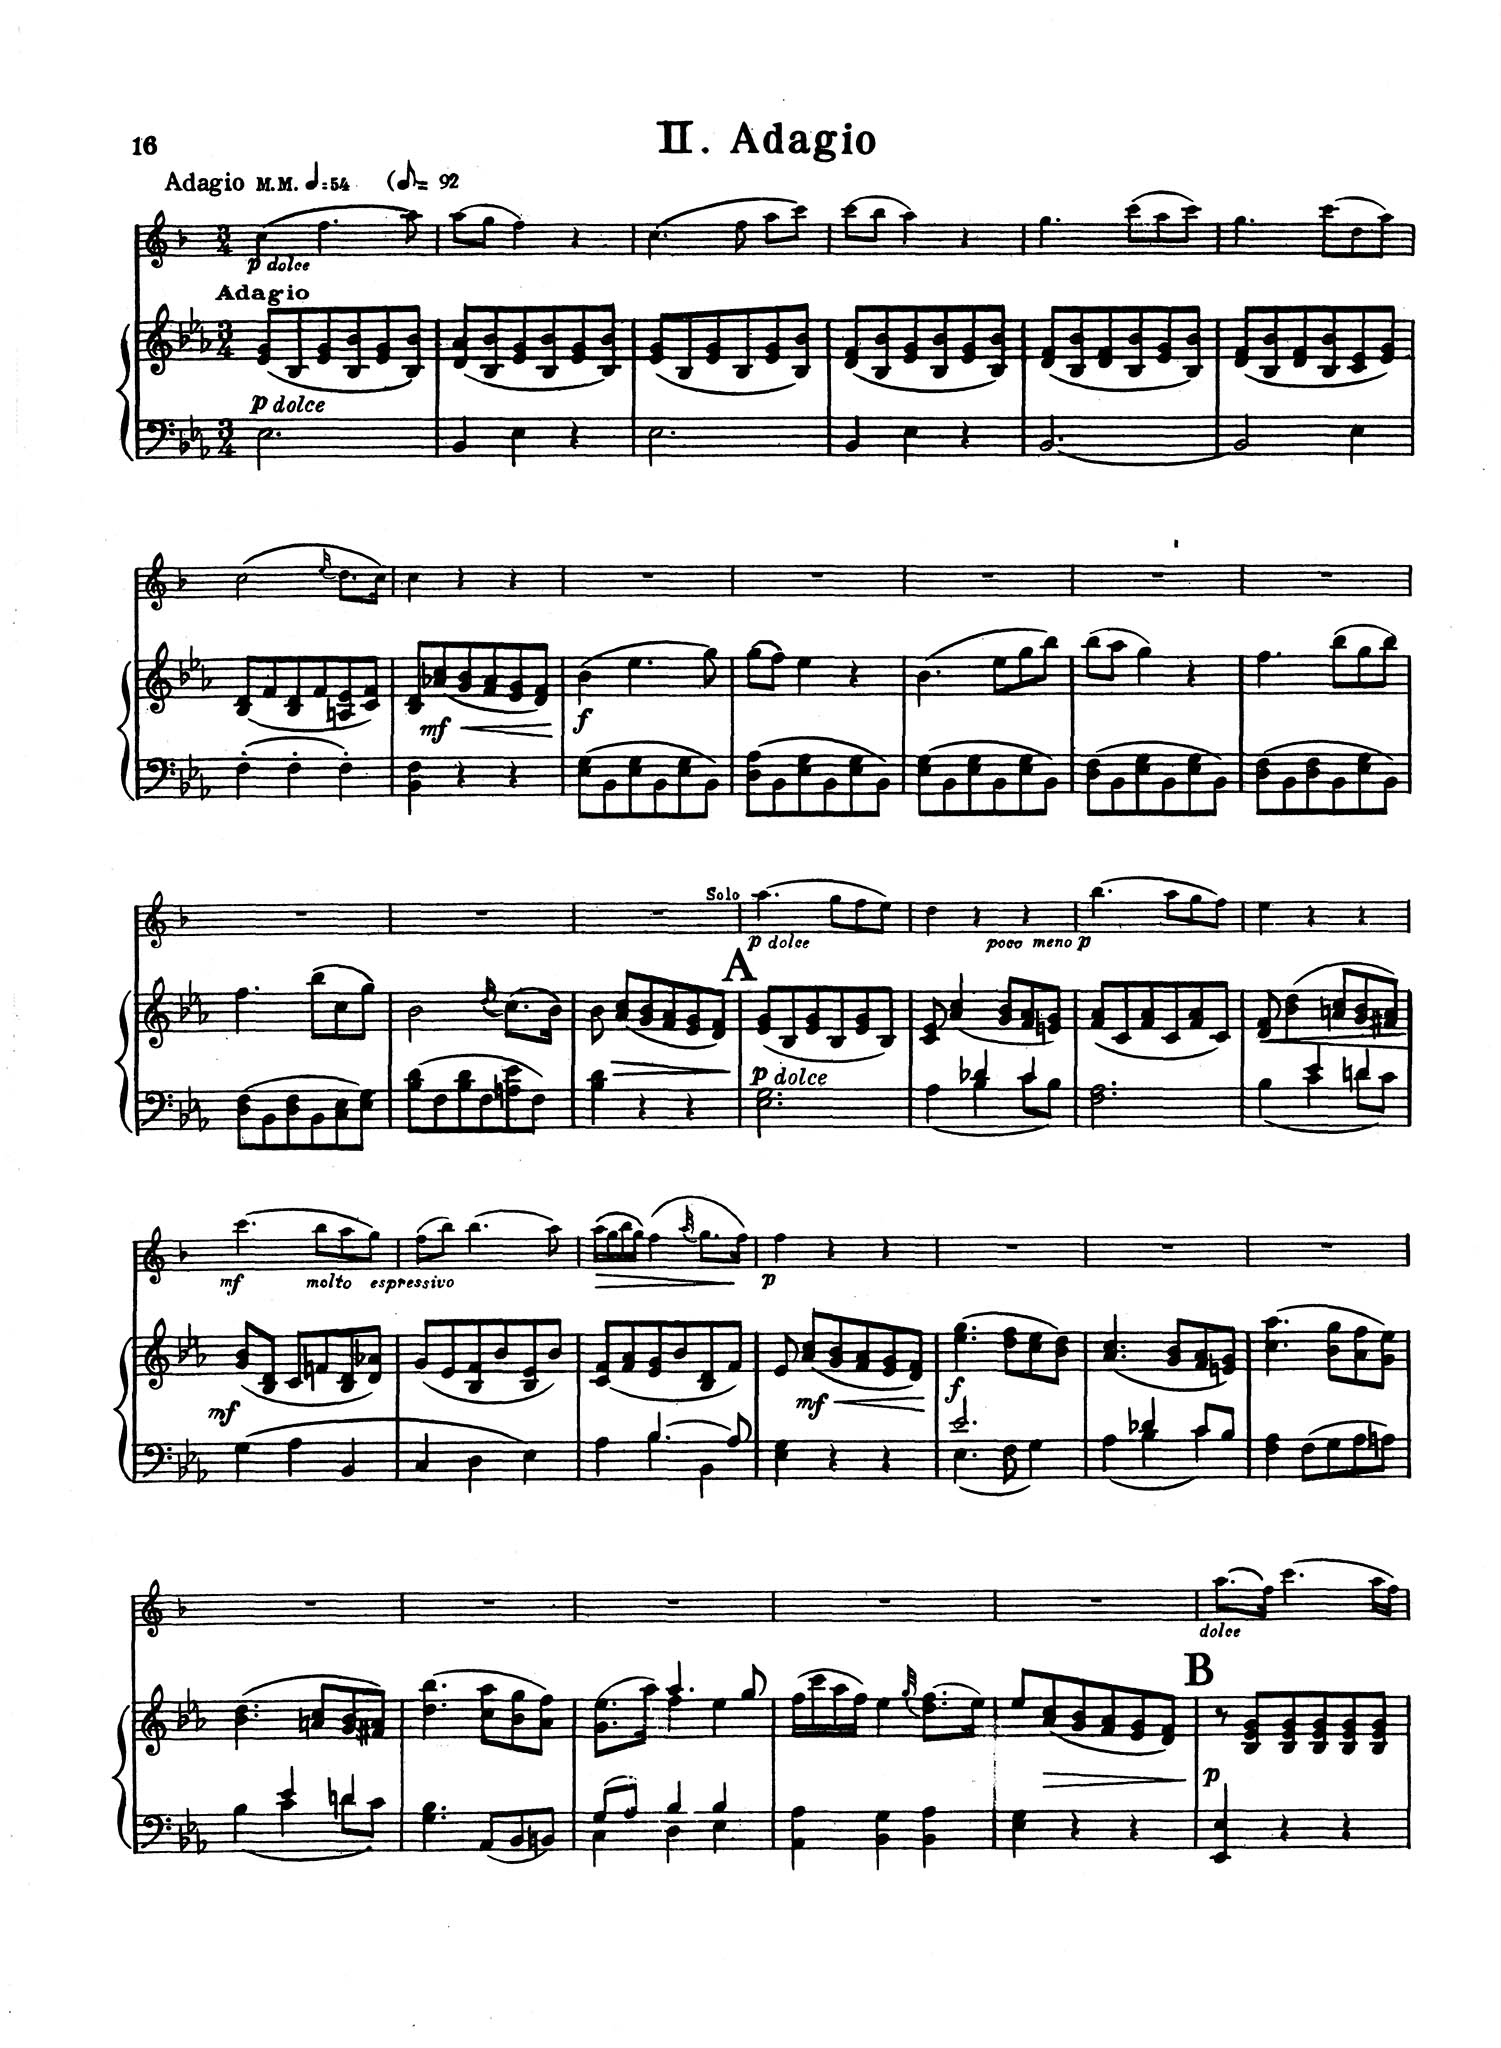 Clarinet Concerto in A Major, K. 622 - Movement 2